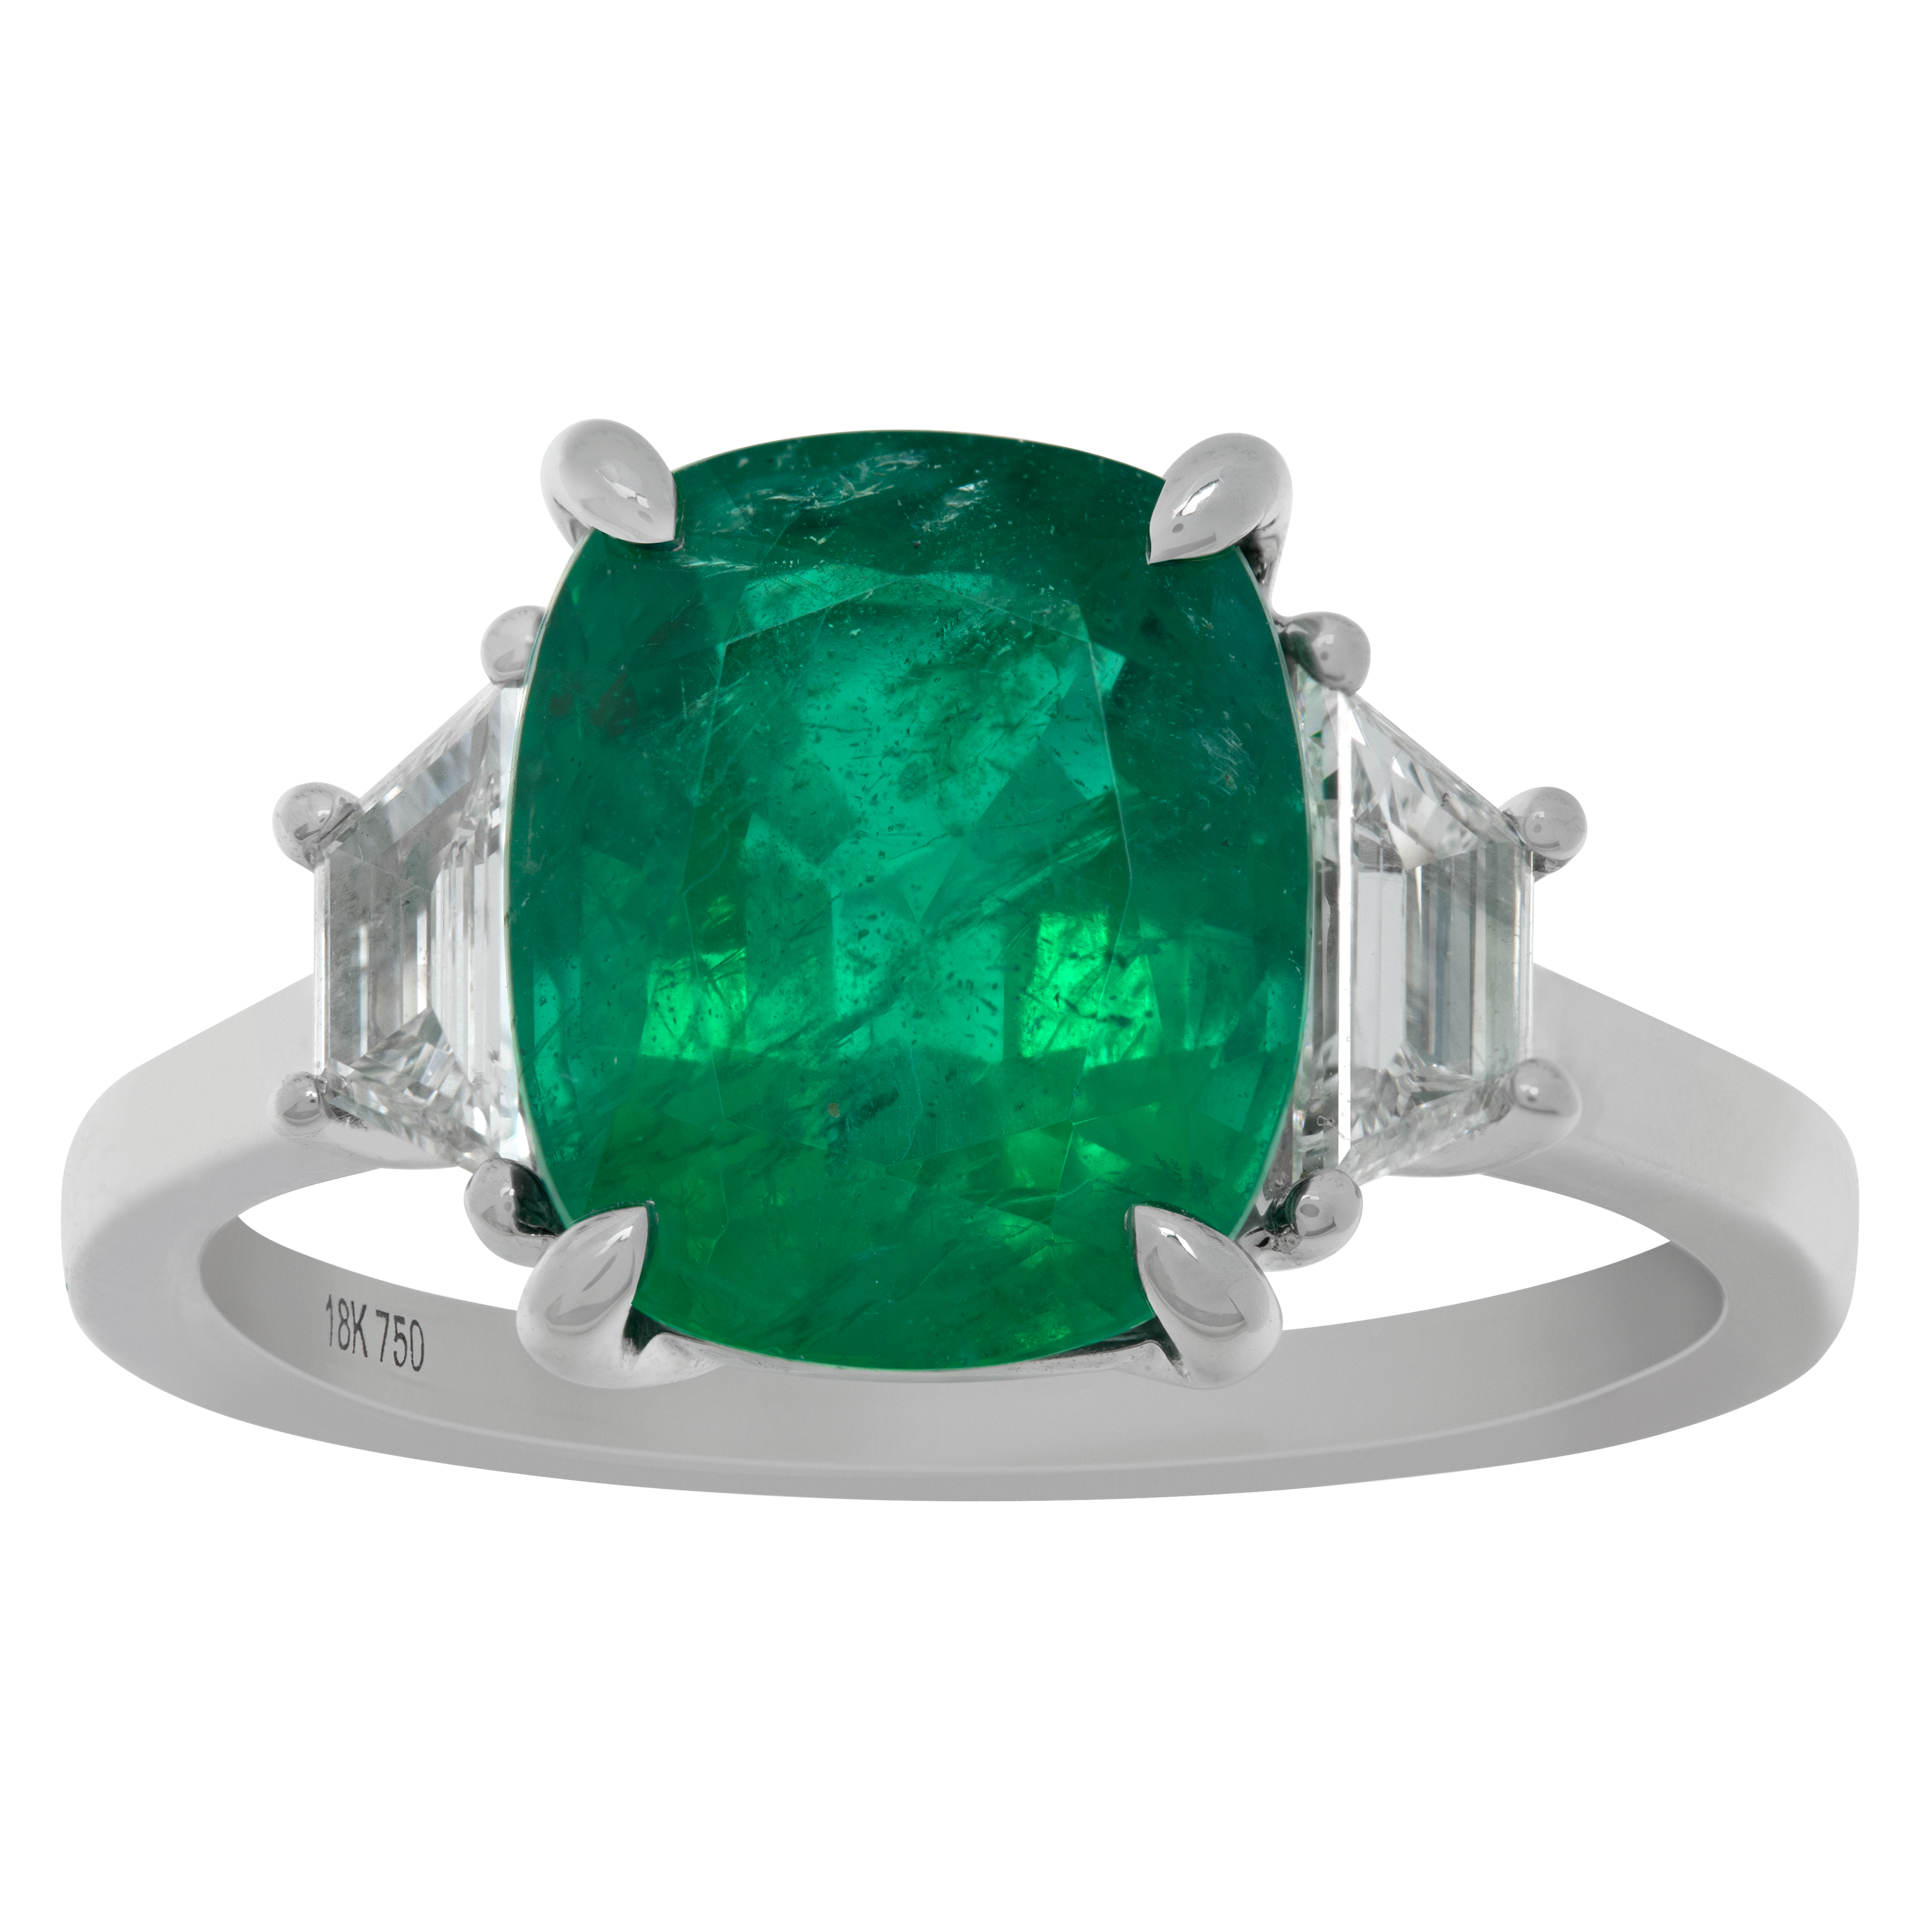 GIA certified 4.11 carat natural beryl cushion cut emerald ring